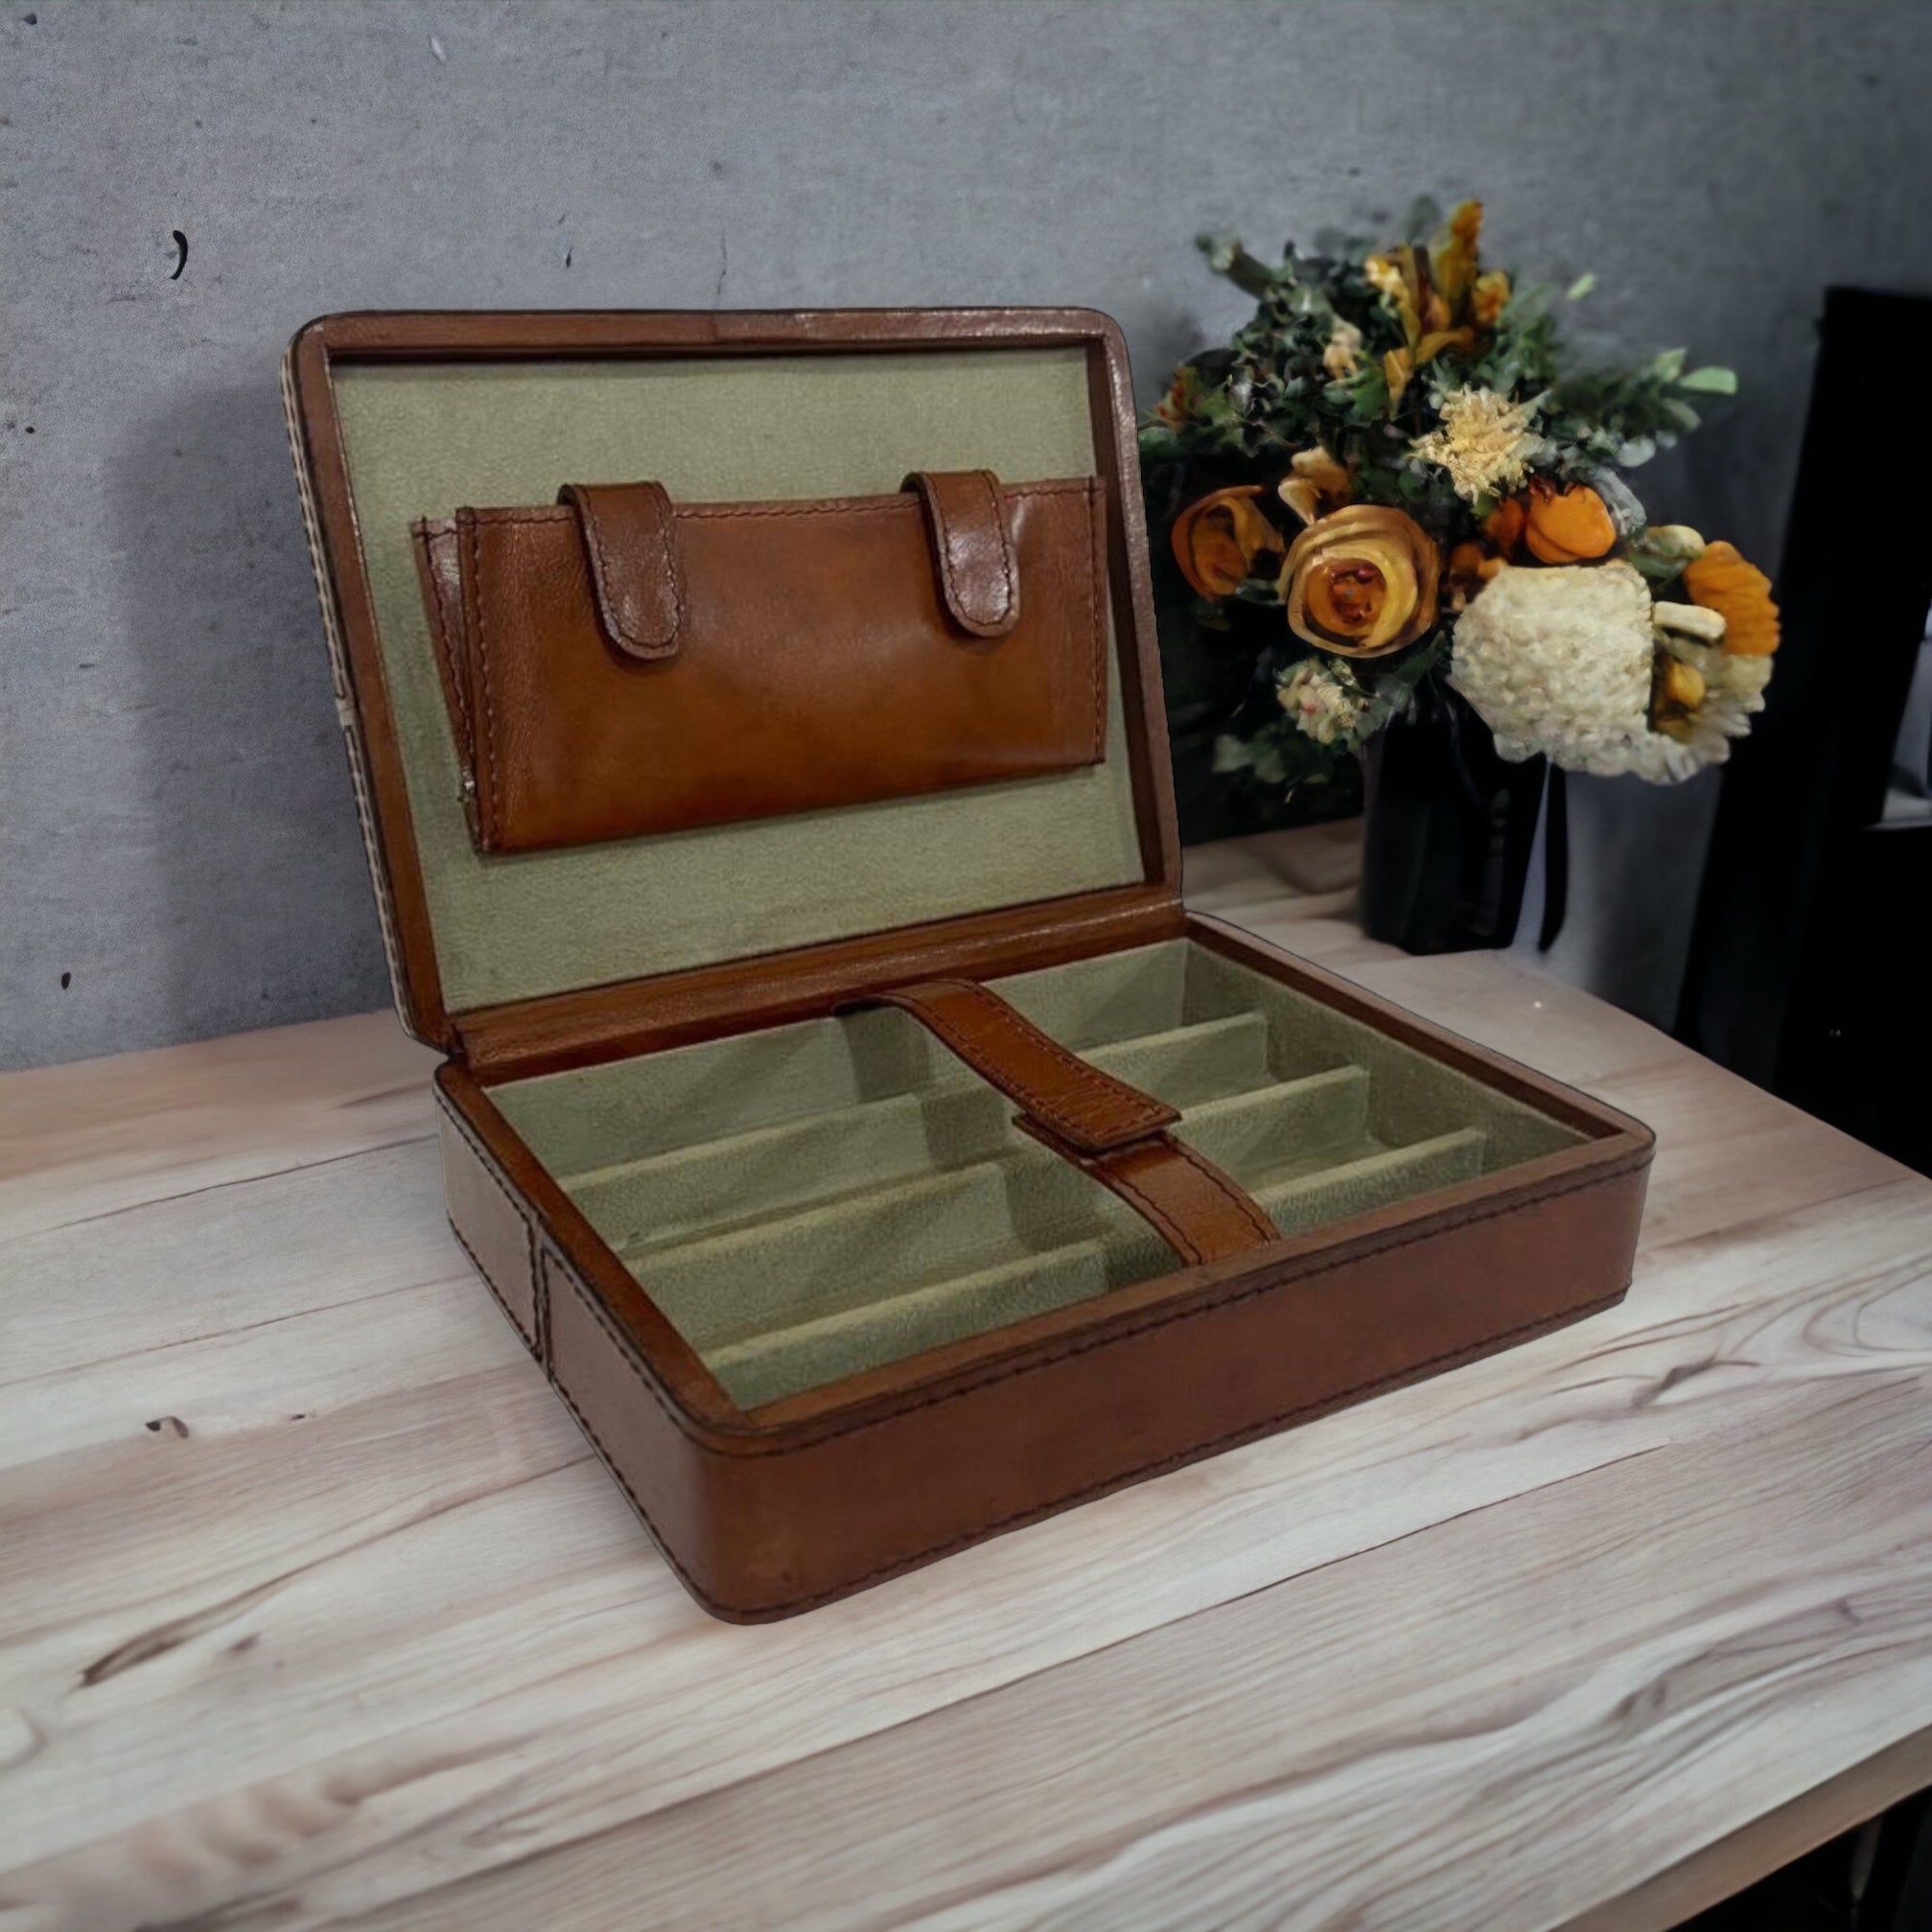 Agora Tan Leather 4-Cigar Box - Notbrand